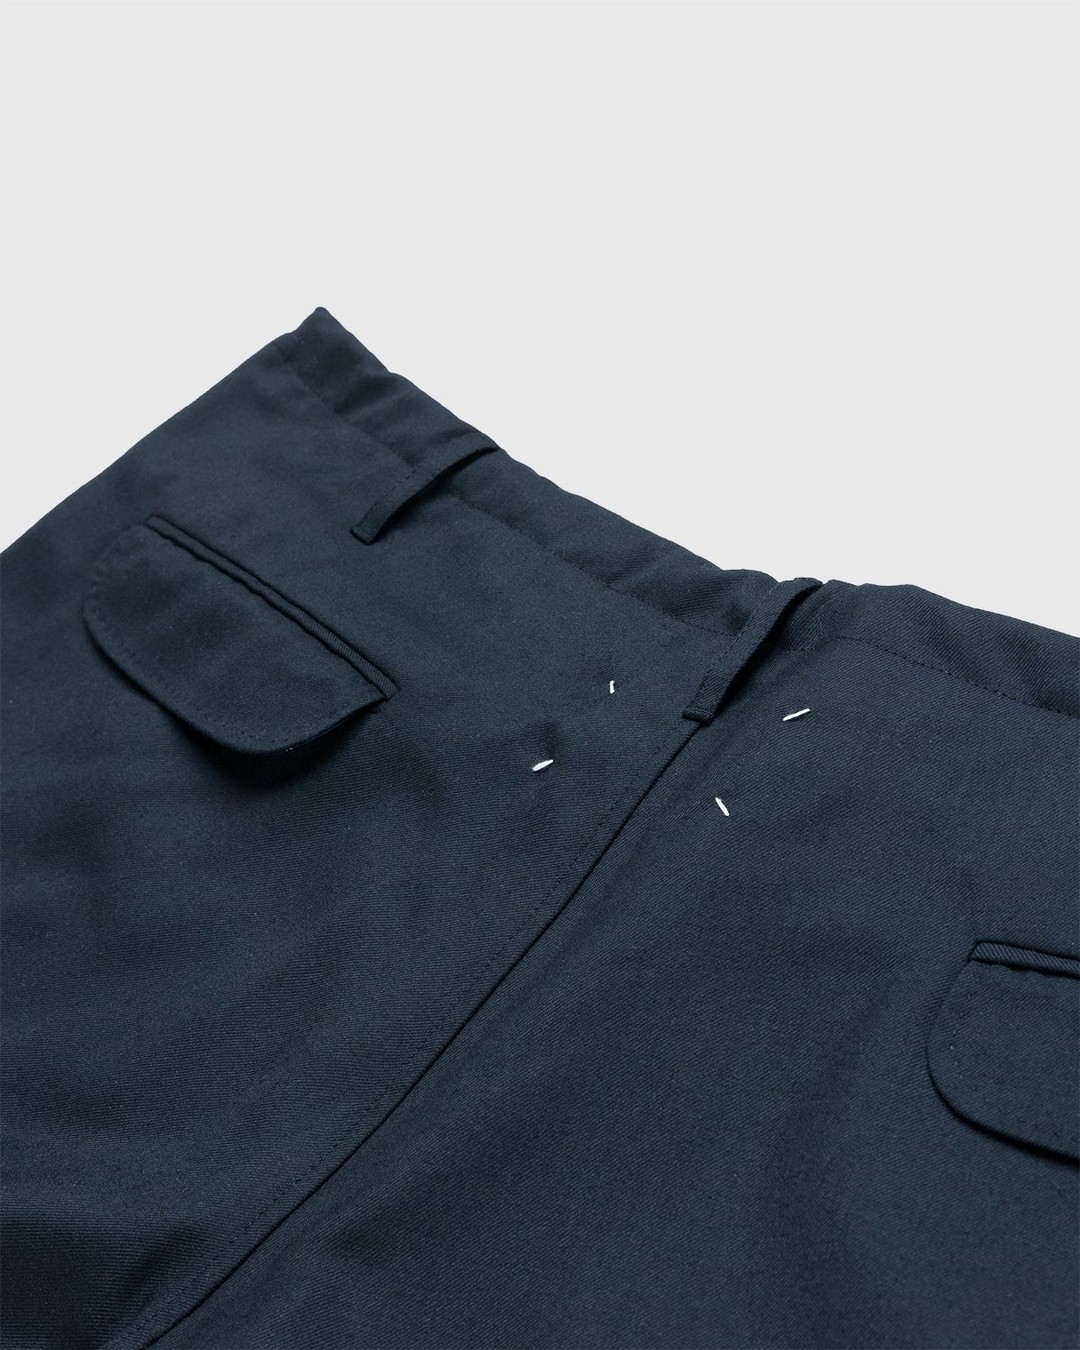 Maison Margiela – Drawstring Leg Trousers Black - Pants - Black - Image 4